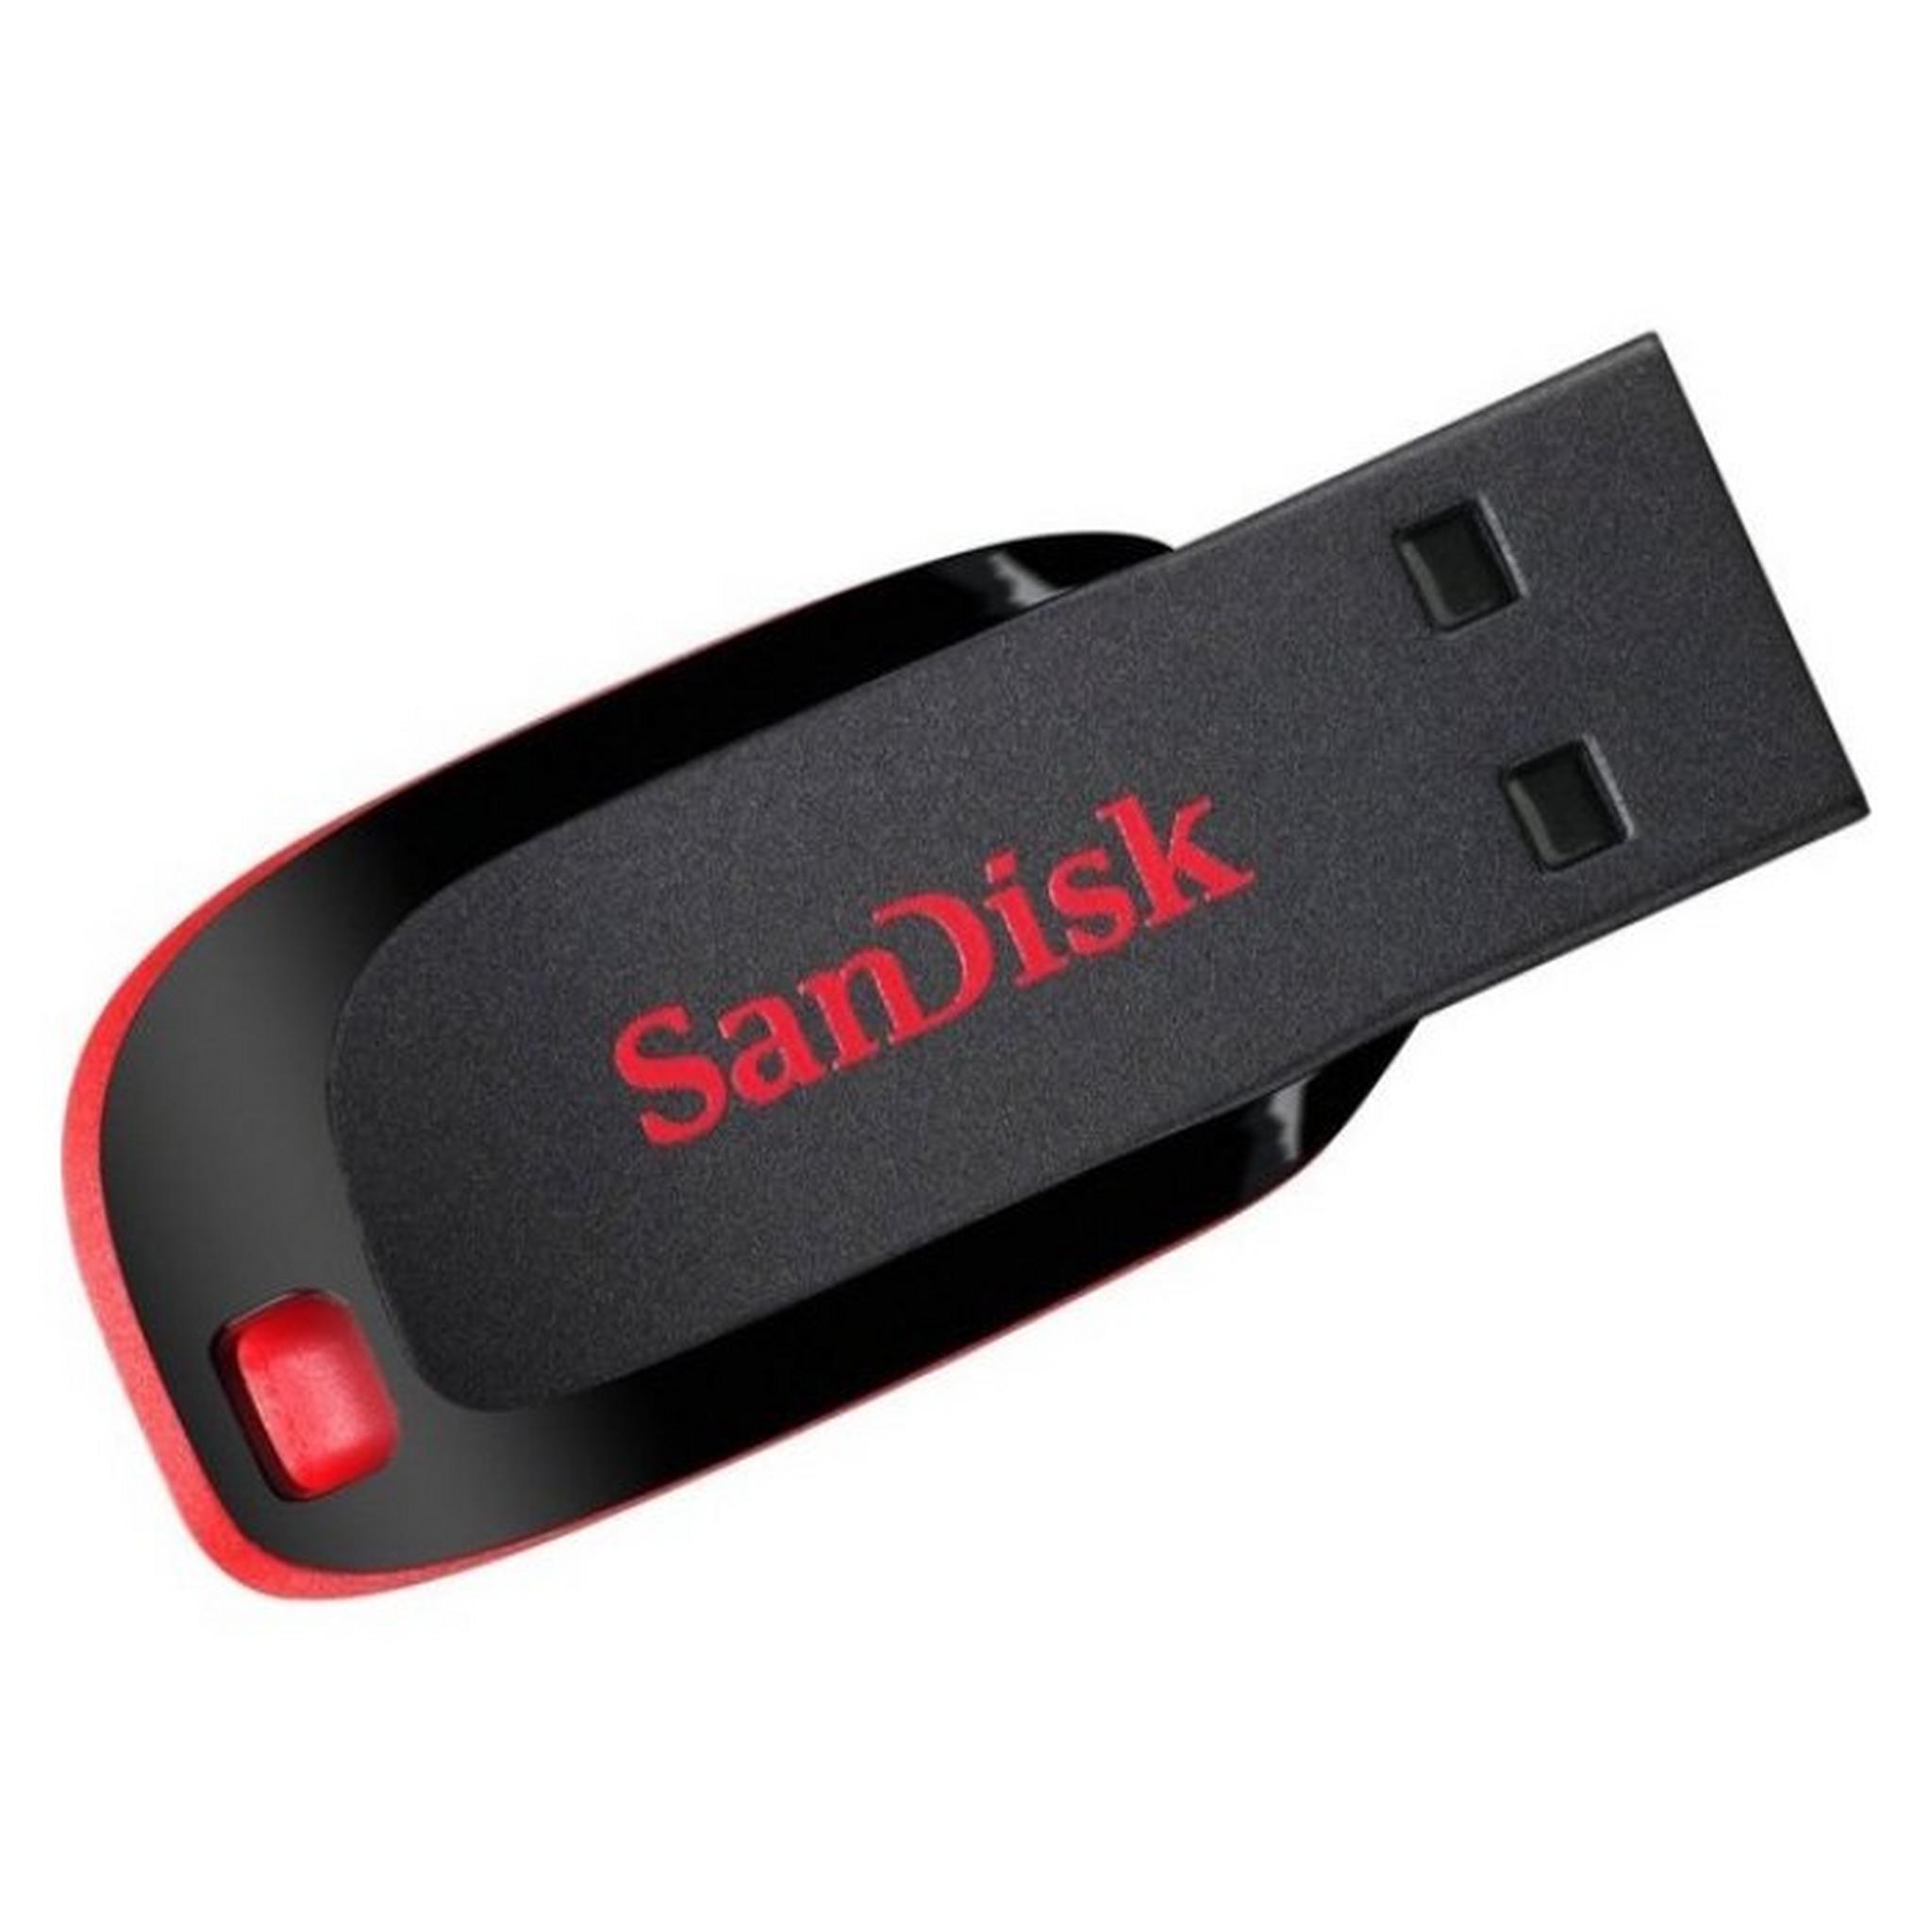 Sandisk Cruzer Blade Flash Drive 16GB - Black